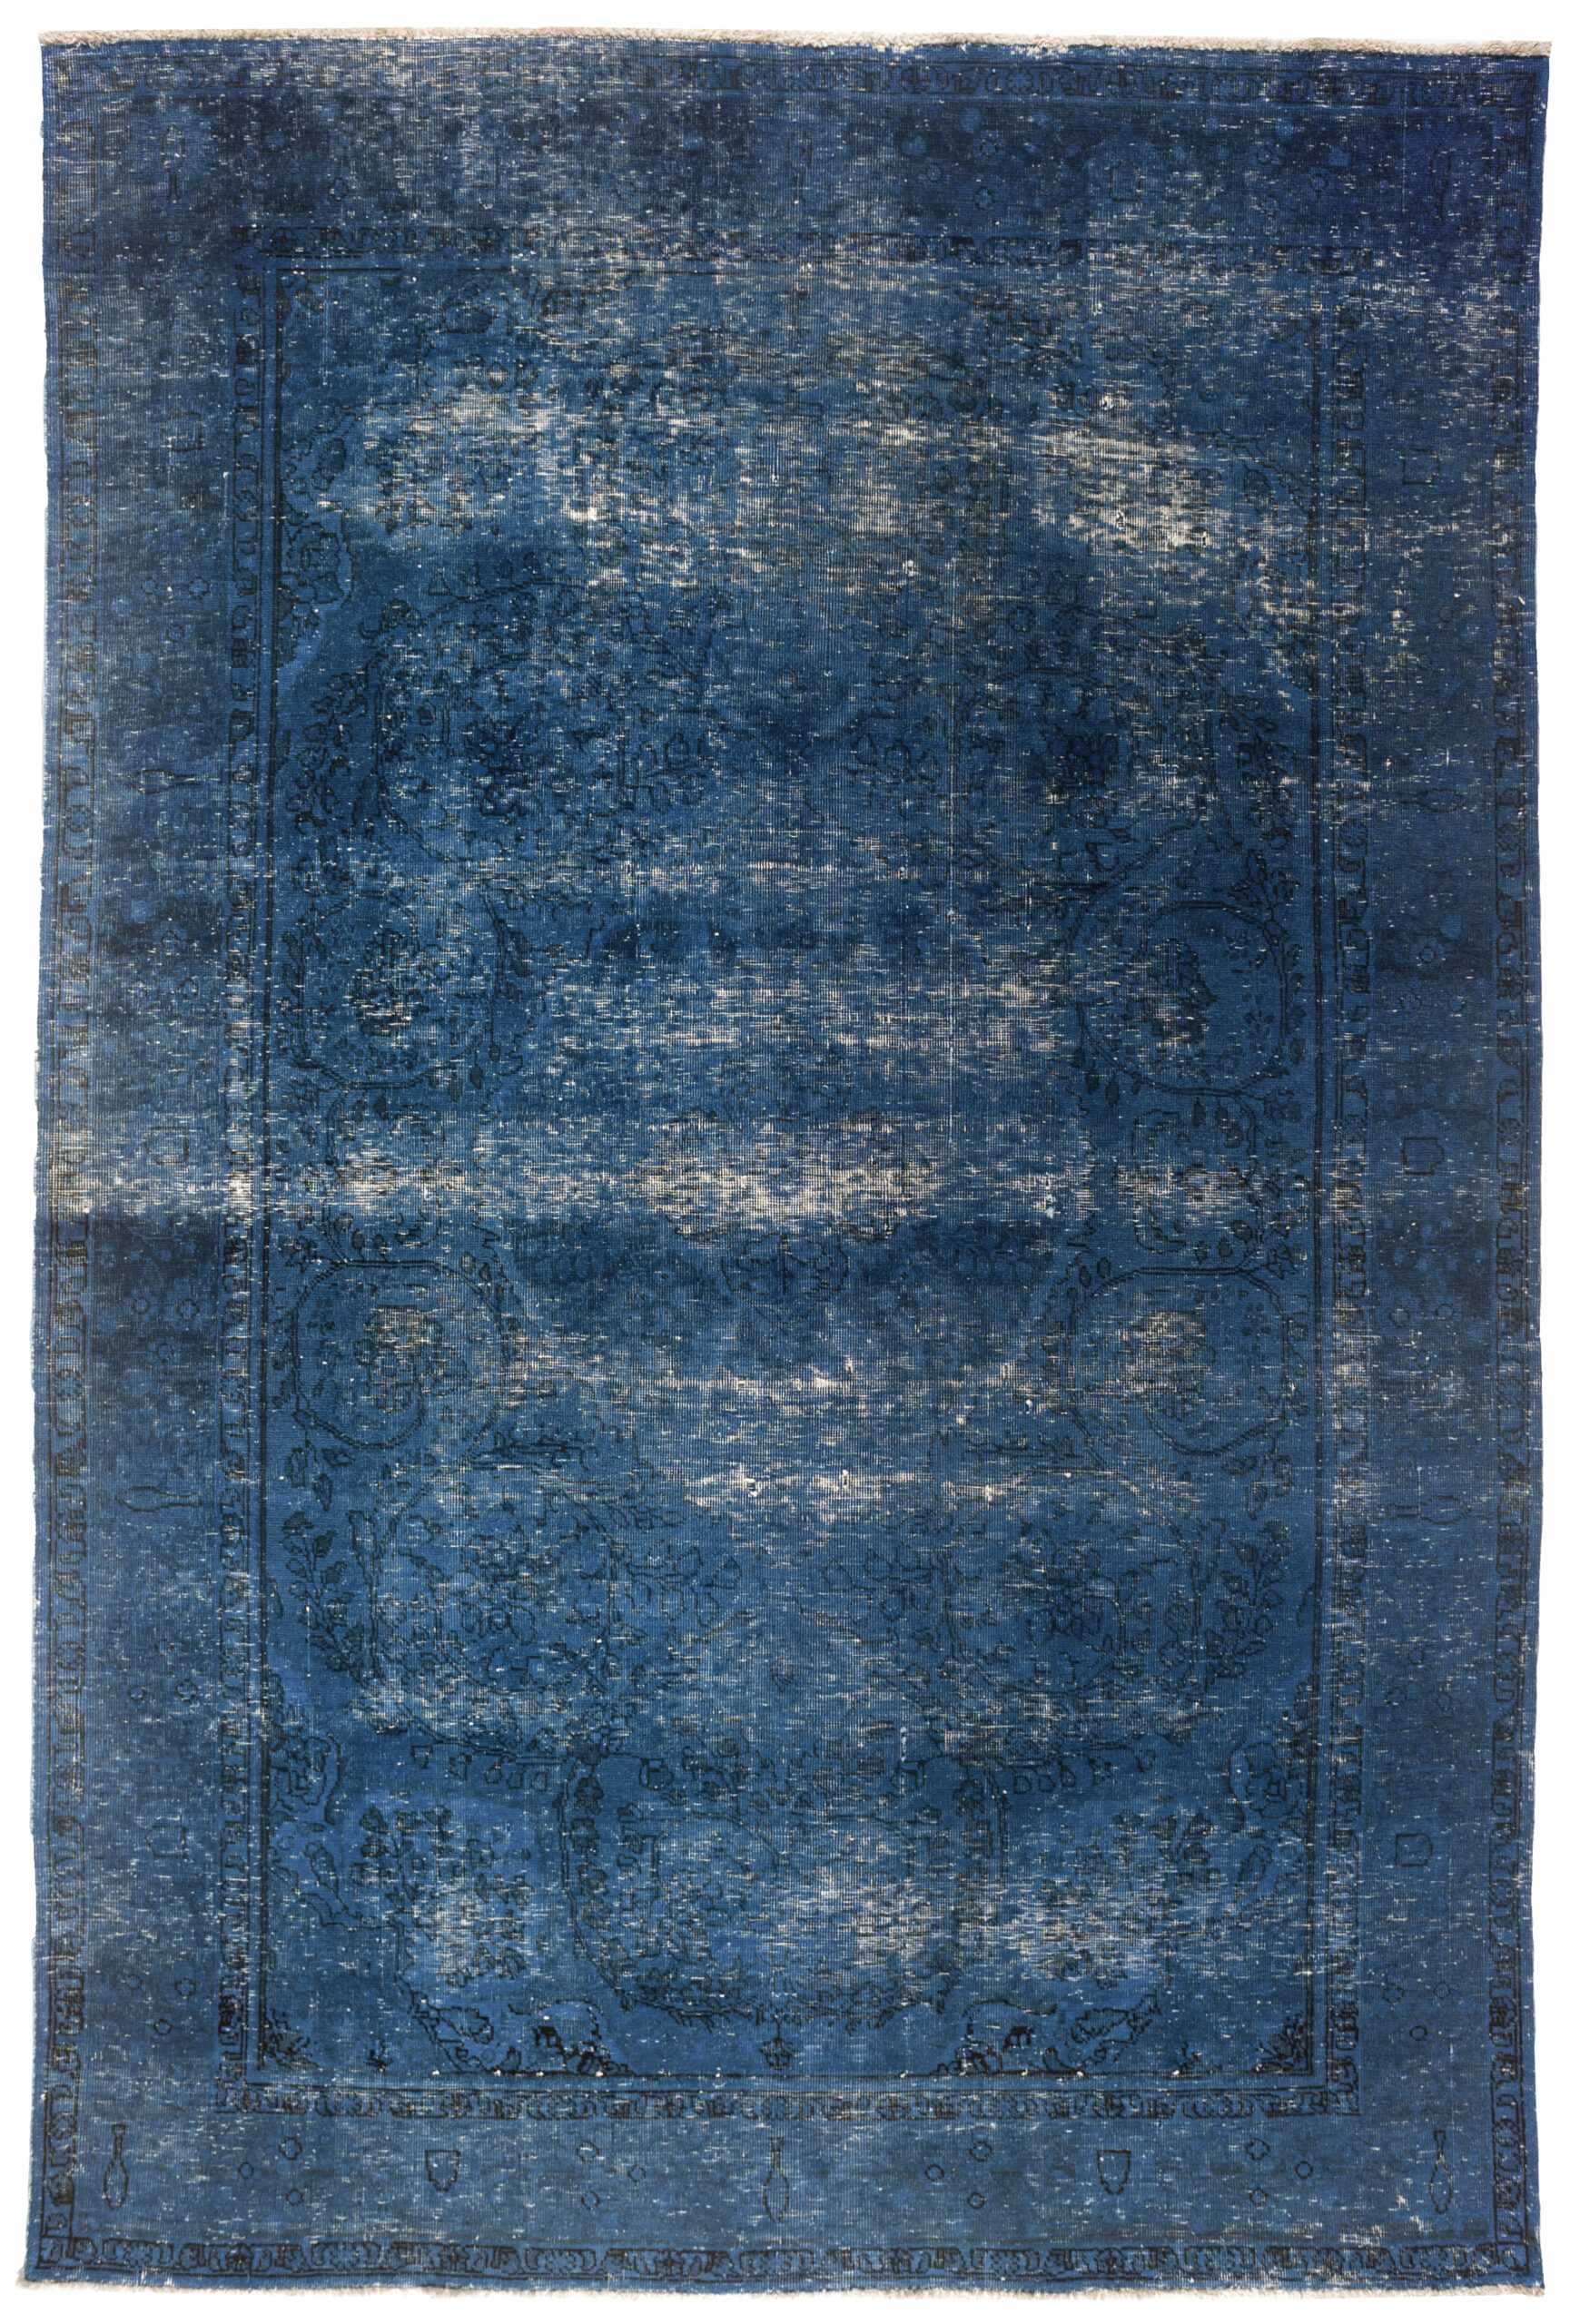 A vintage/overdyed dark blue rug